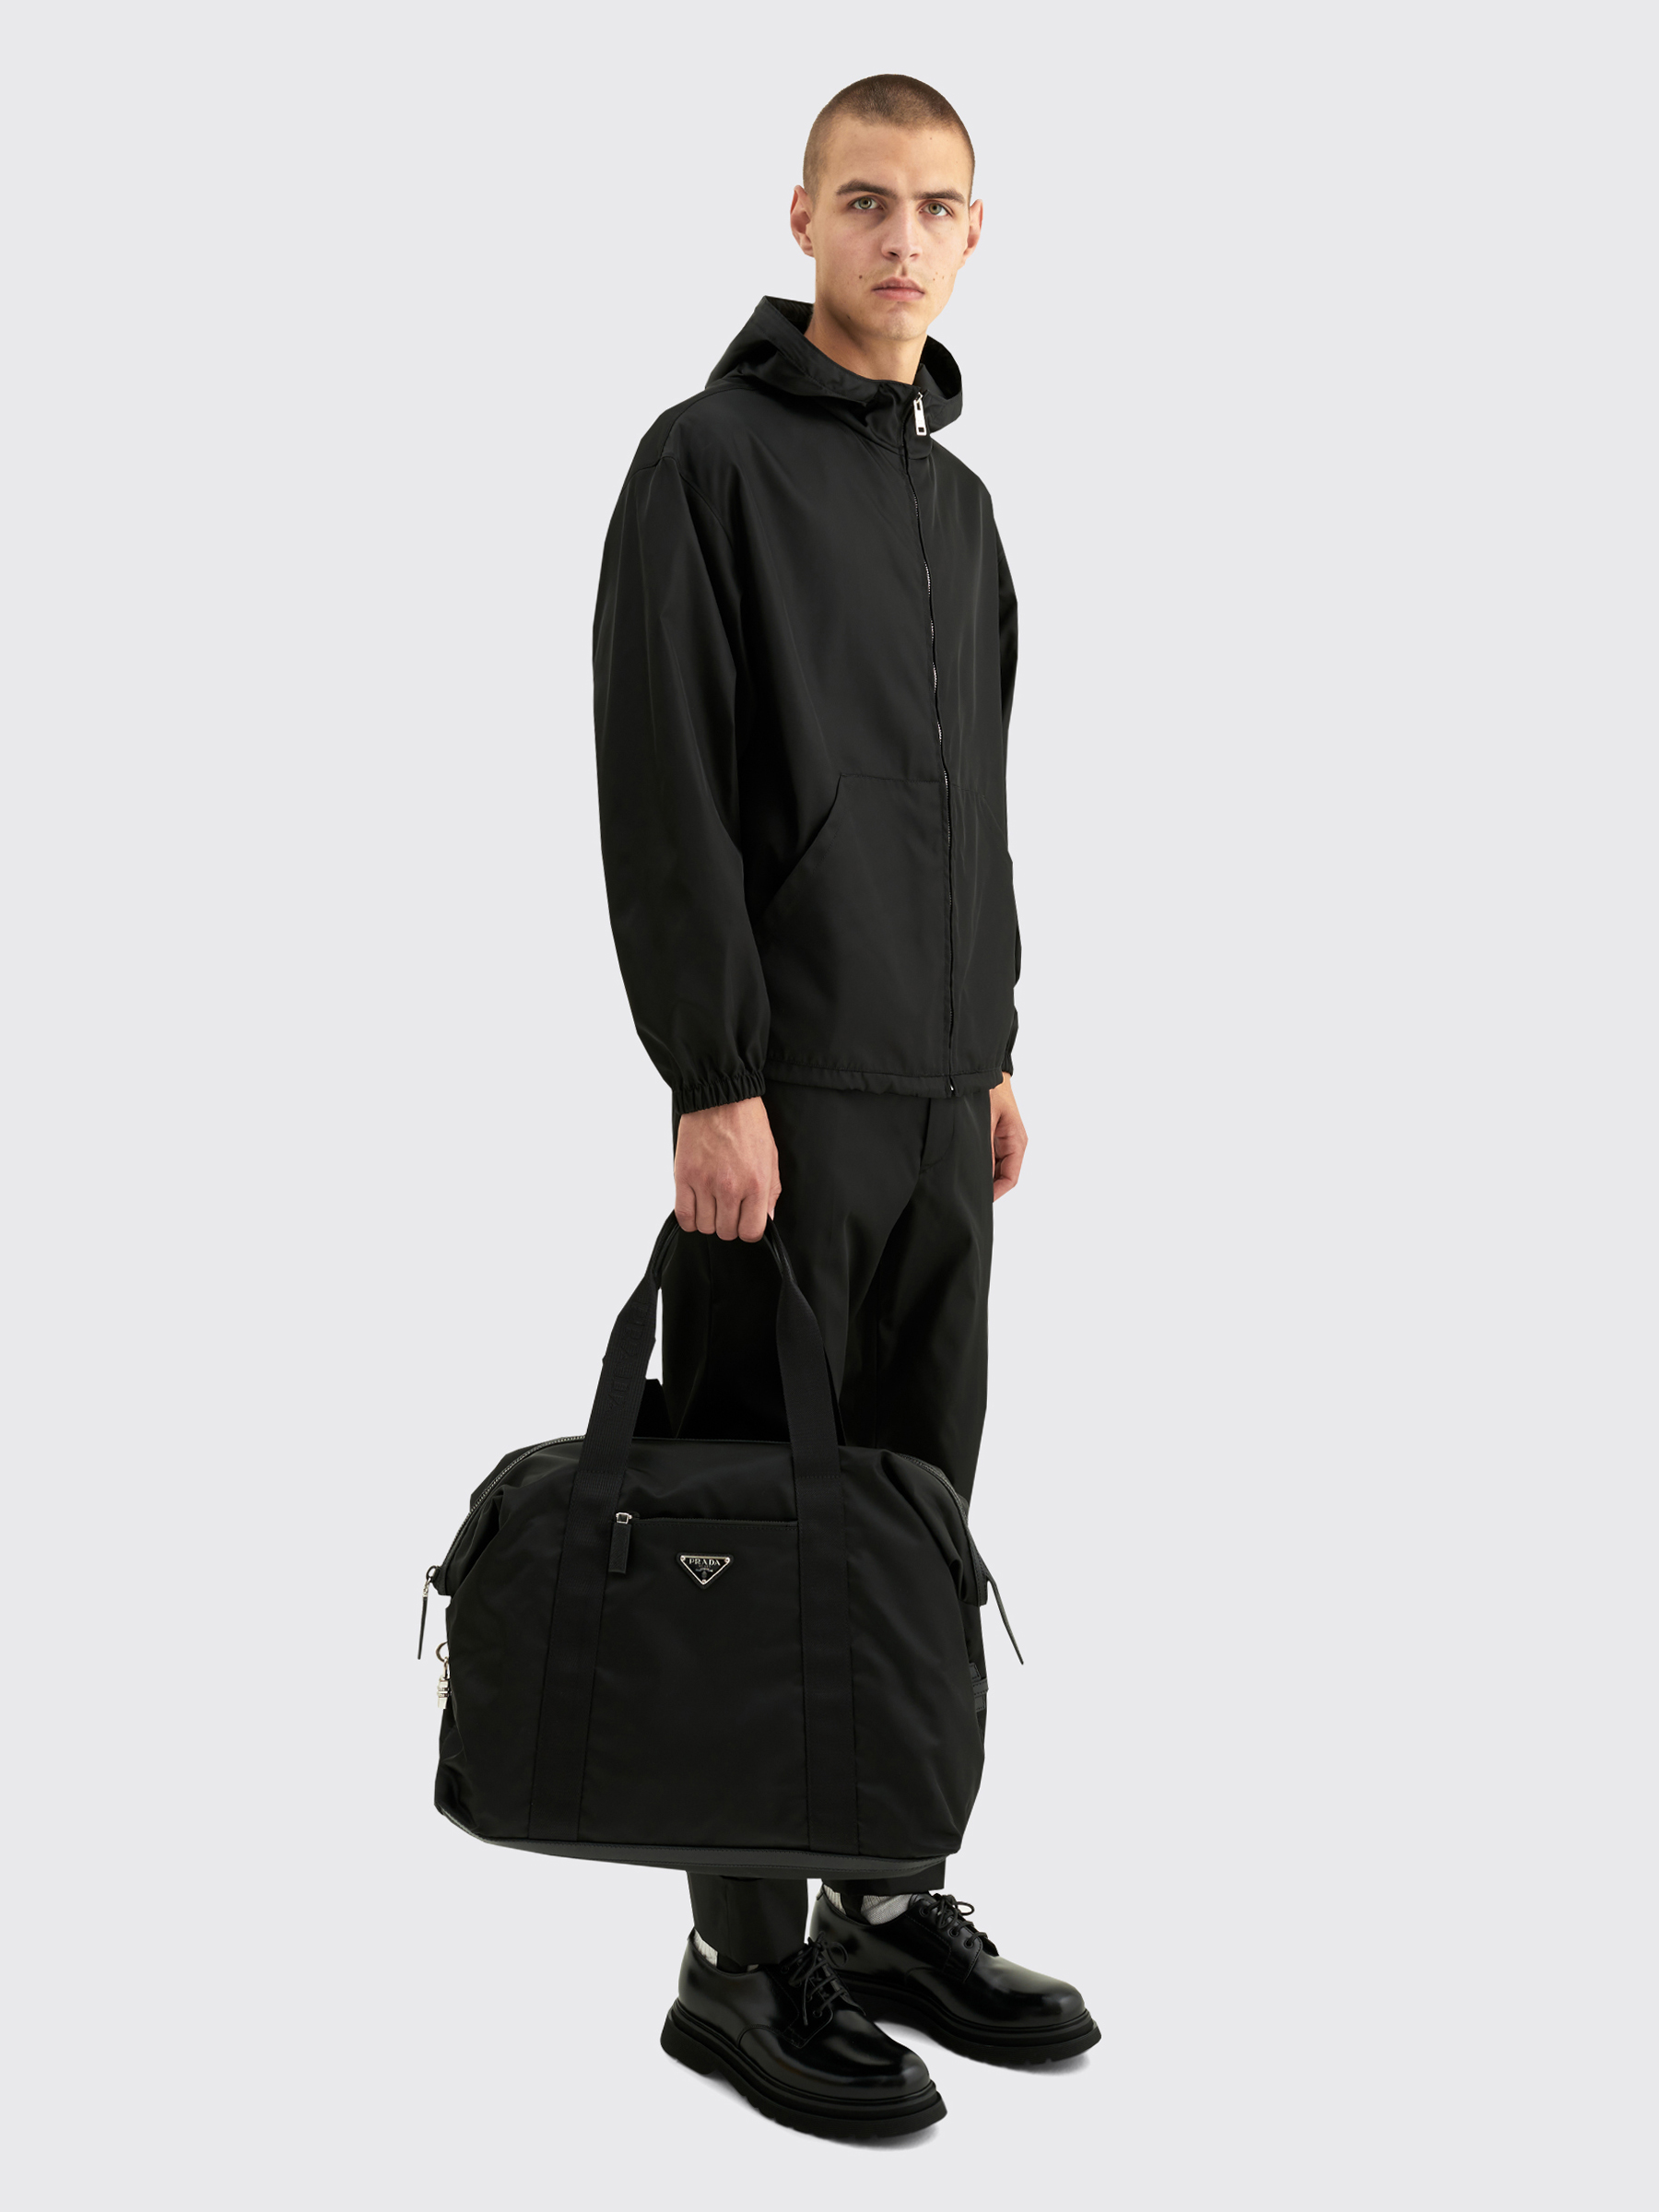 Très Bien - Prada Nylon Travel Bag Black